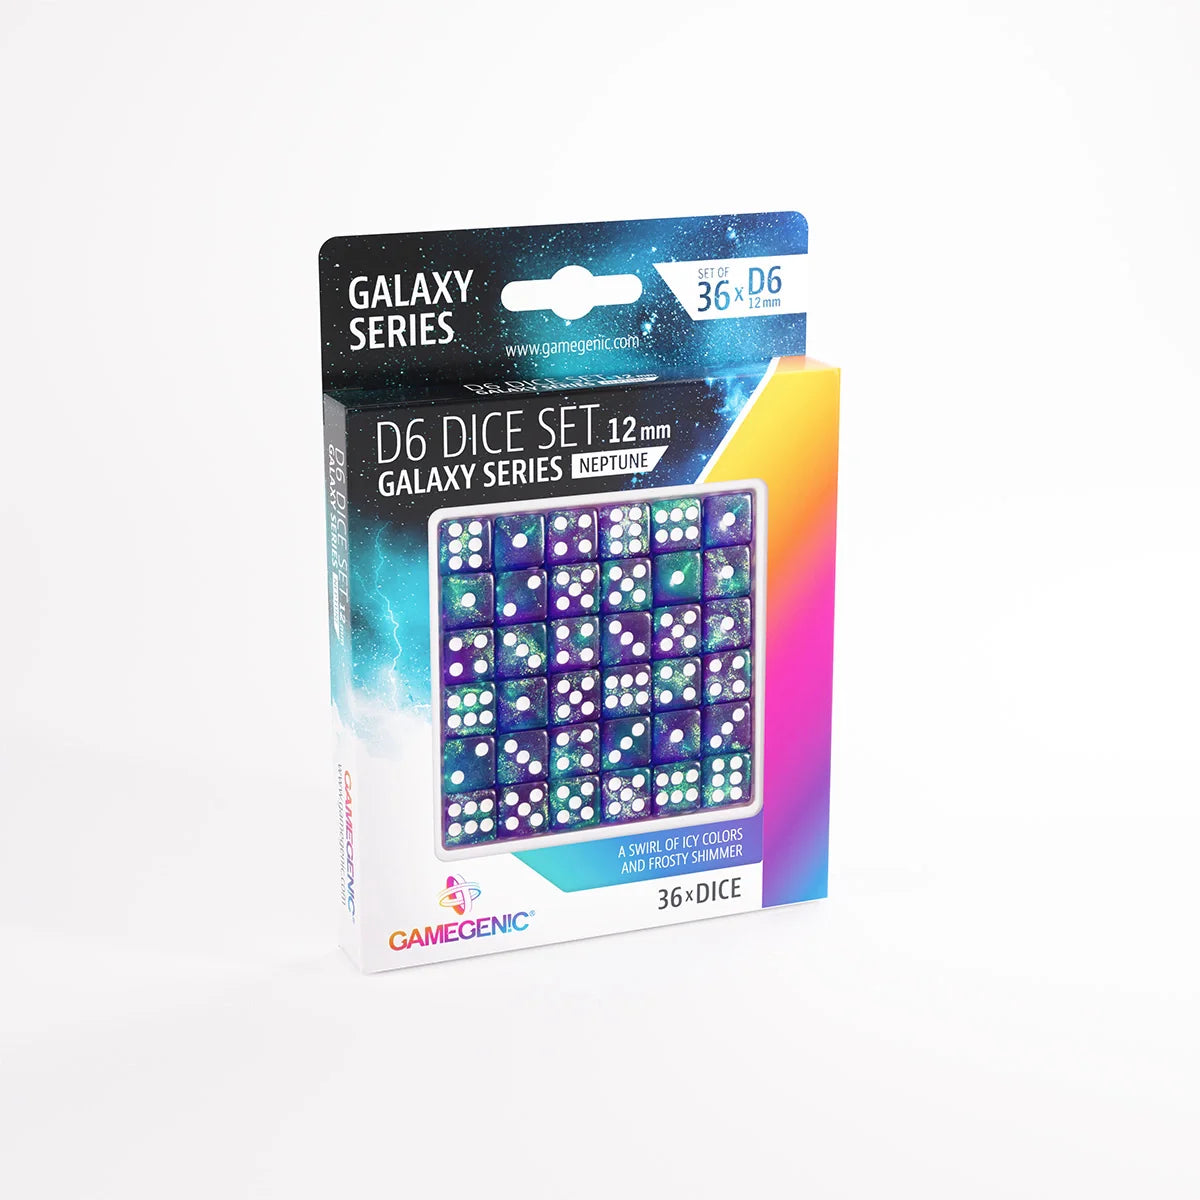 Gamegenic D6 Dice Set - Galaxy Series - Neptune (36x 12mm D6)